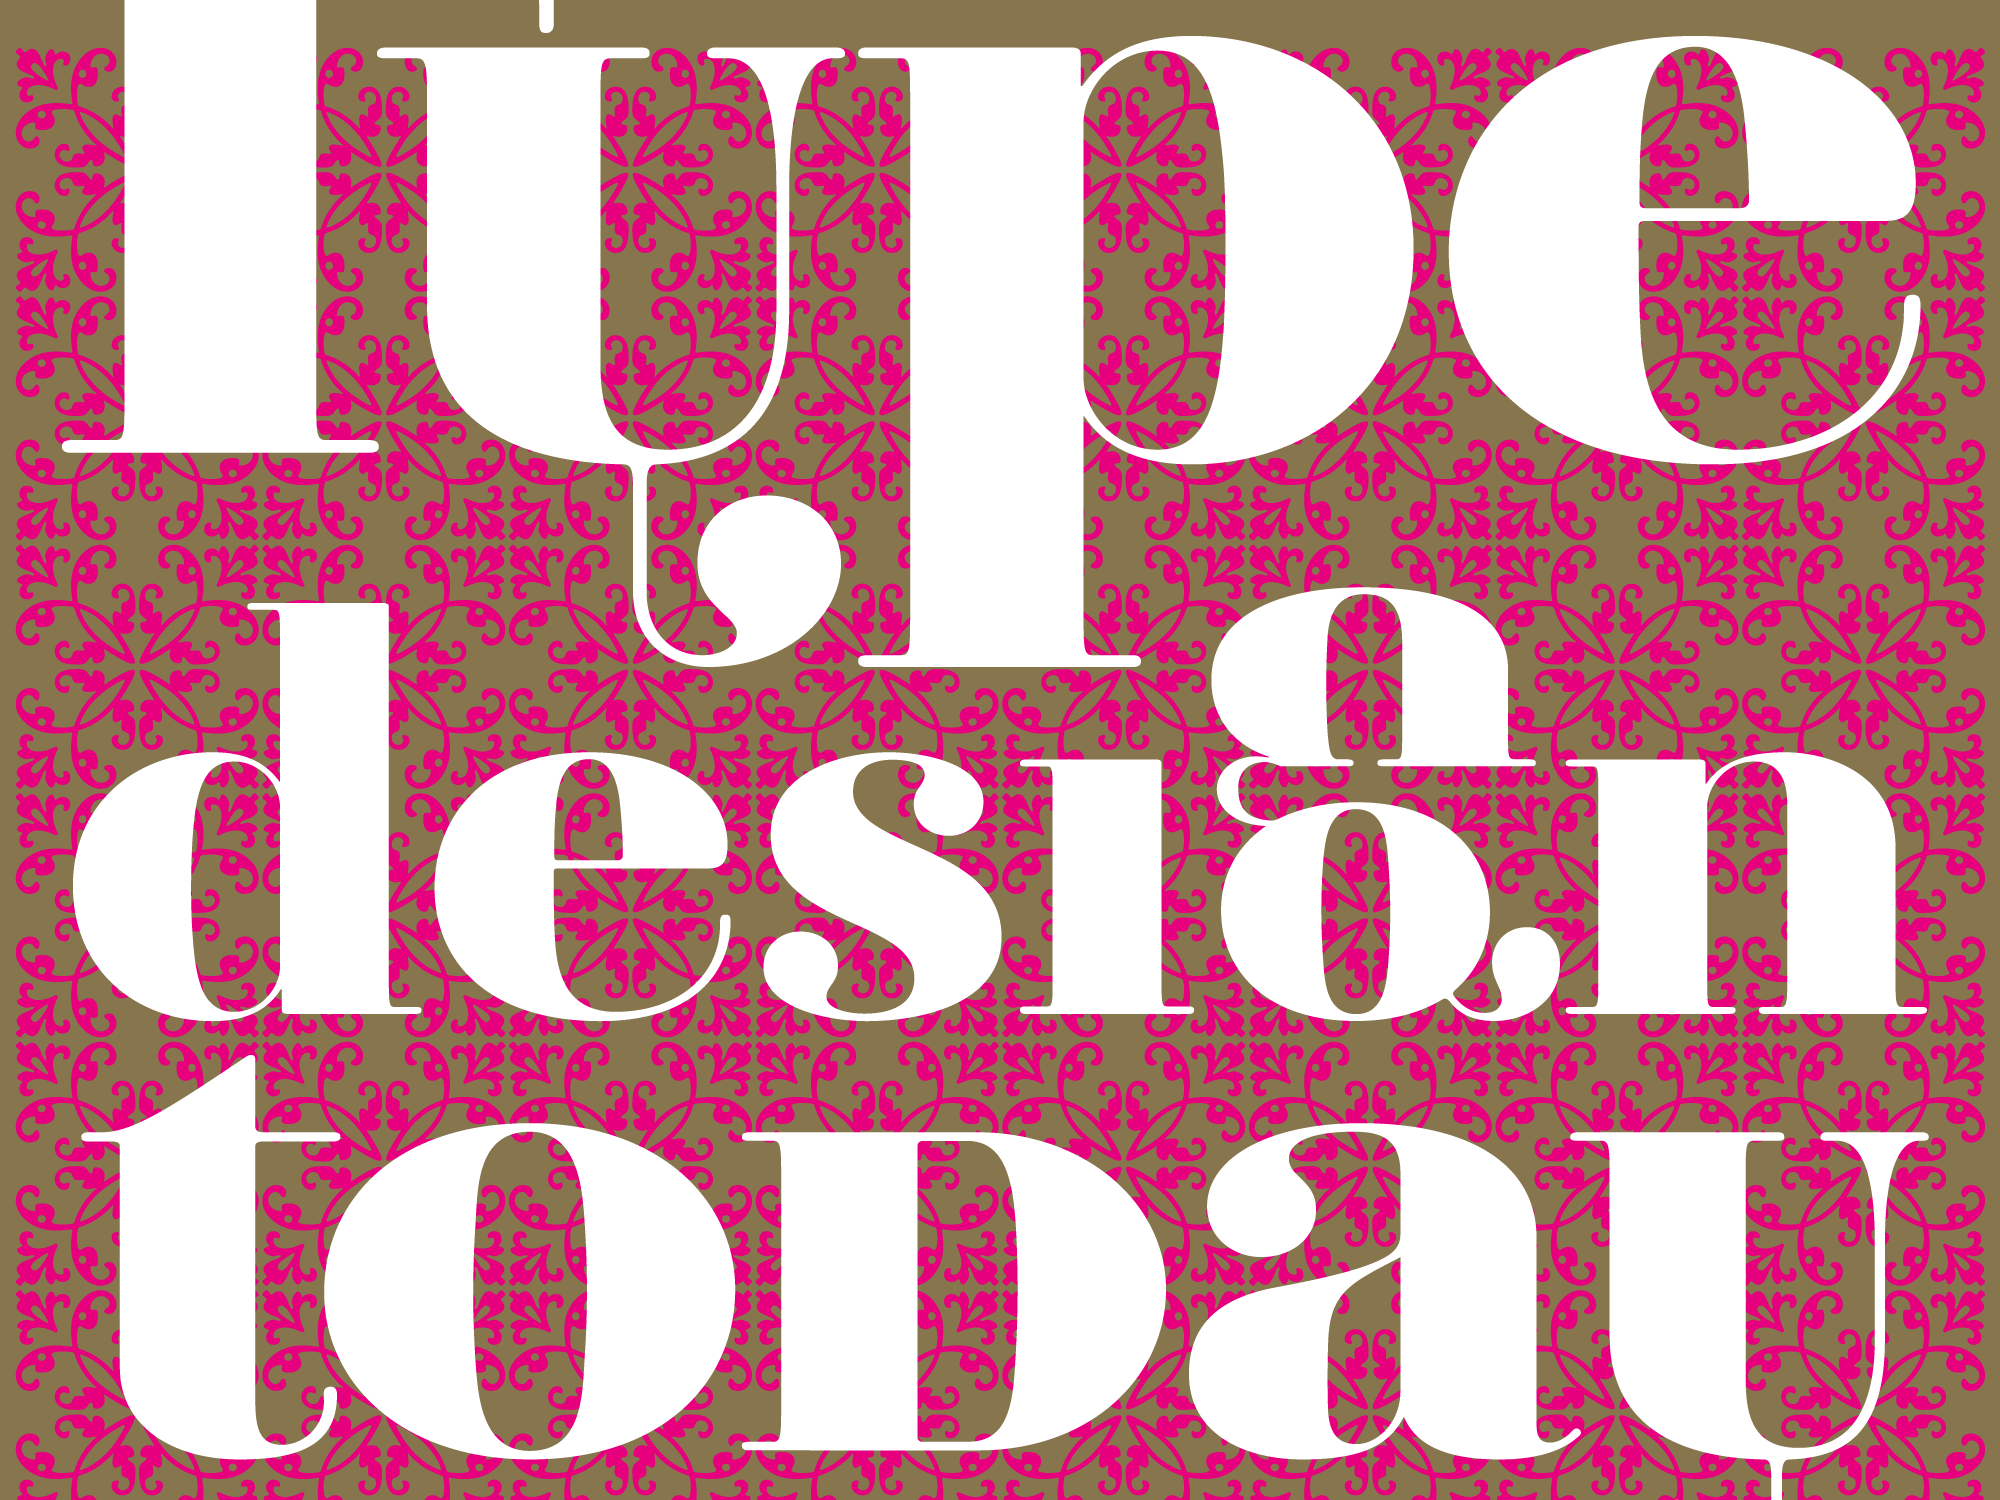 Idea 305: Type design today